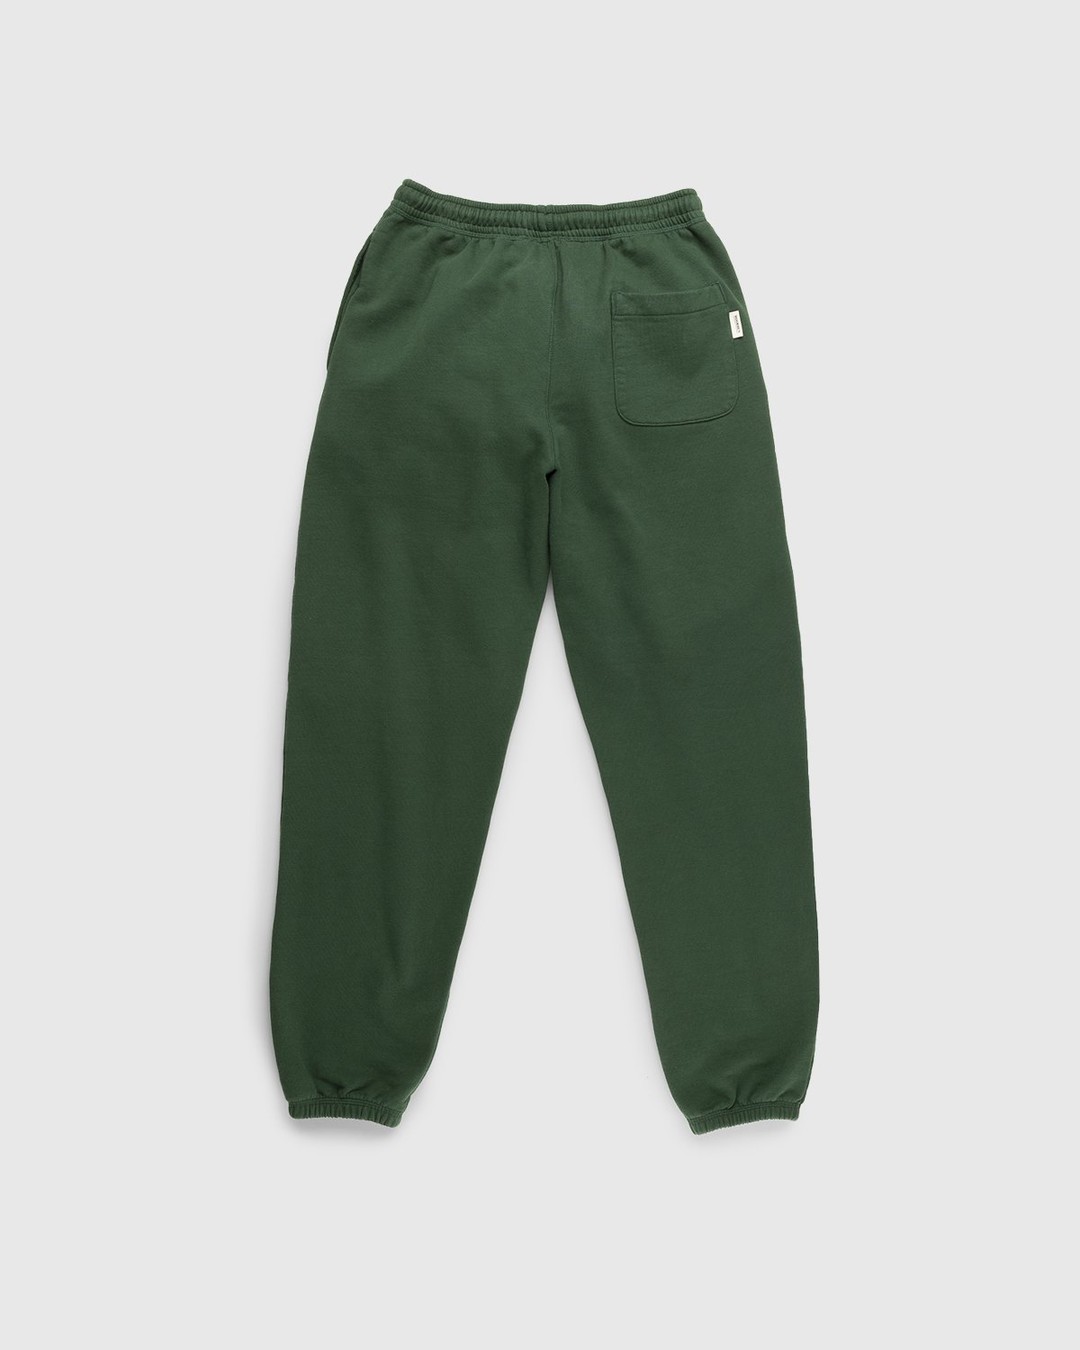 Highsnobiety – Logo Fleece Staples Pants Campus Green - Pants - Green - Image 2